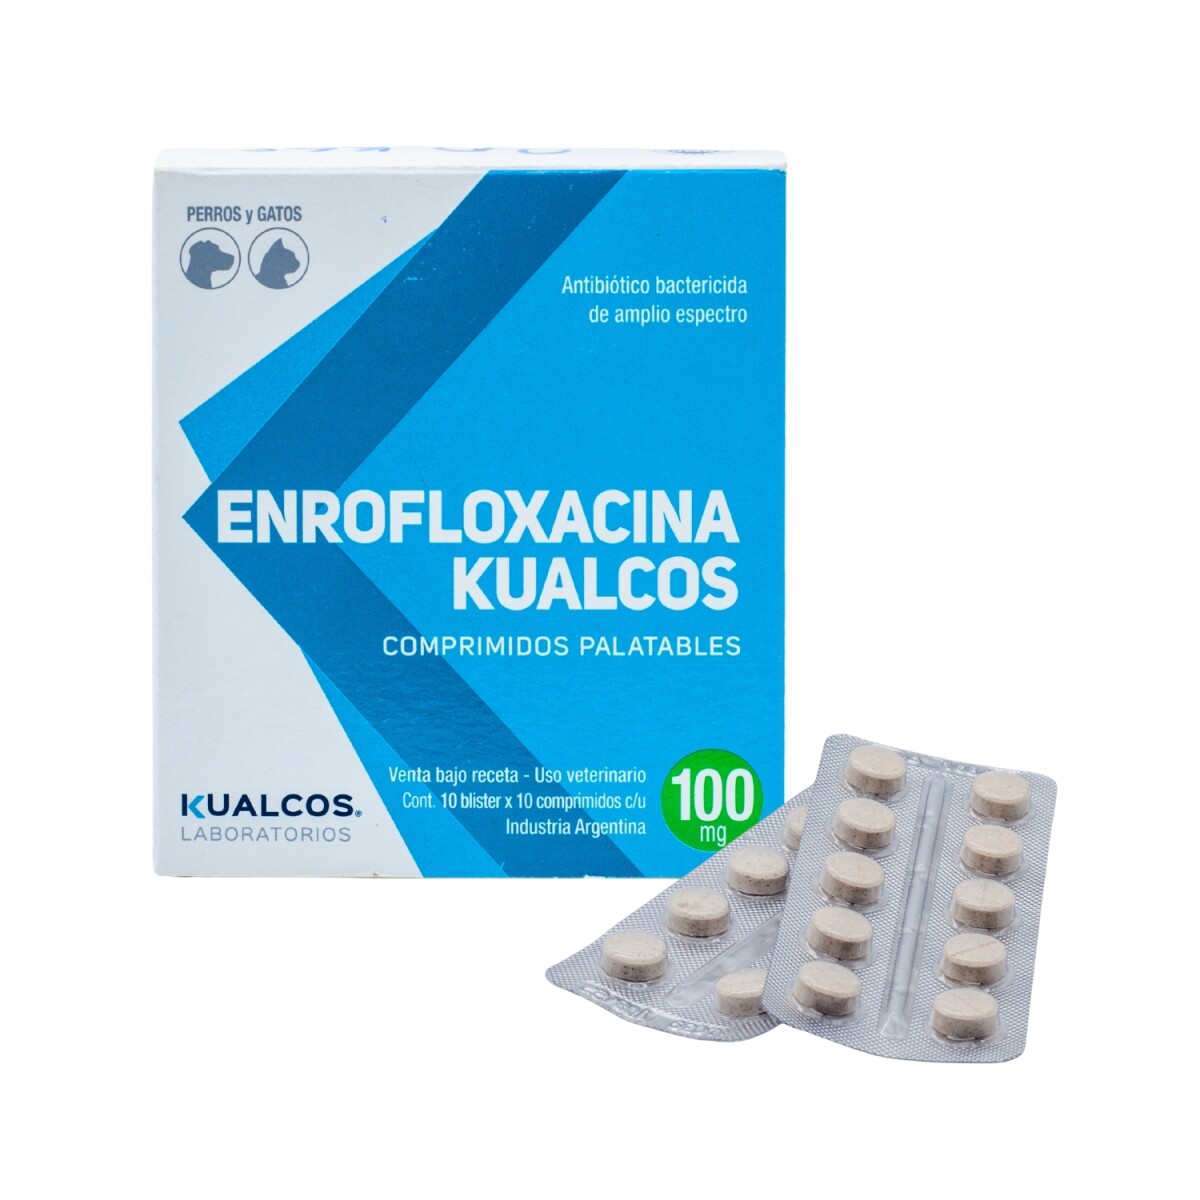 ENROFLOXACINA KUALCOS 100 MG X BLISTERS DE 10 COMPRIMIDOS PALATABLE 